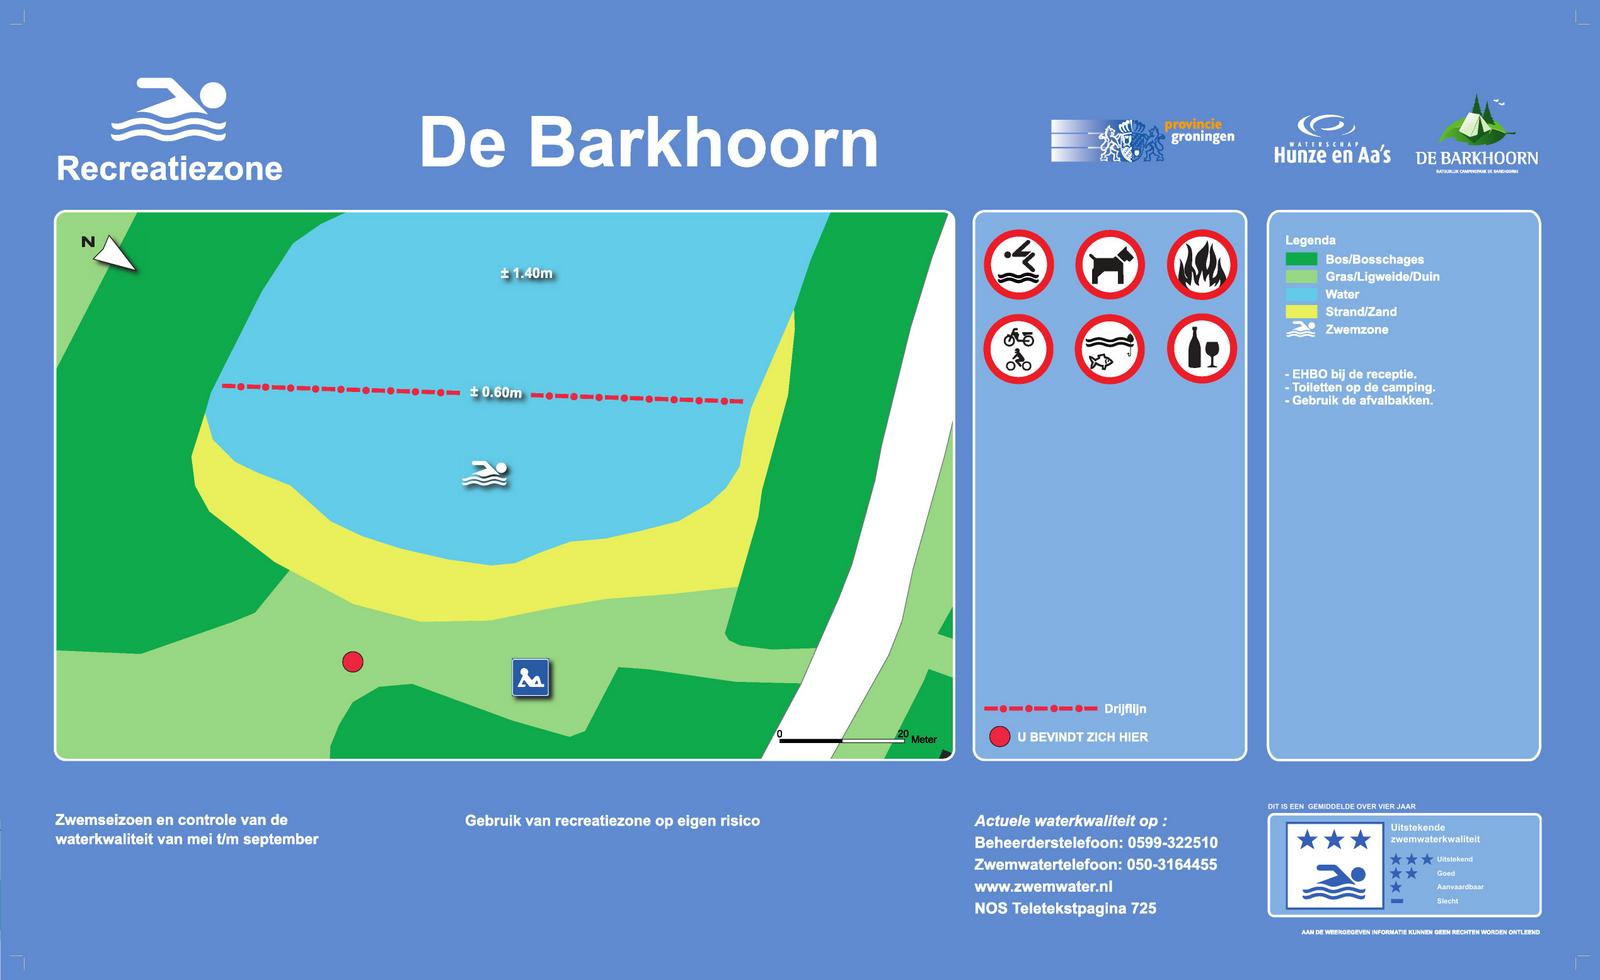 The information board at the swimming location De Barkhoorn, Sellingen